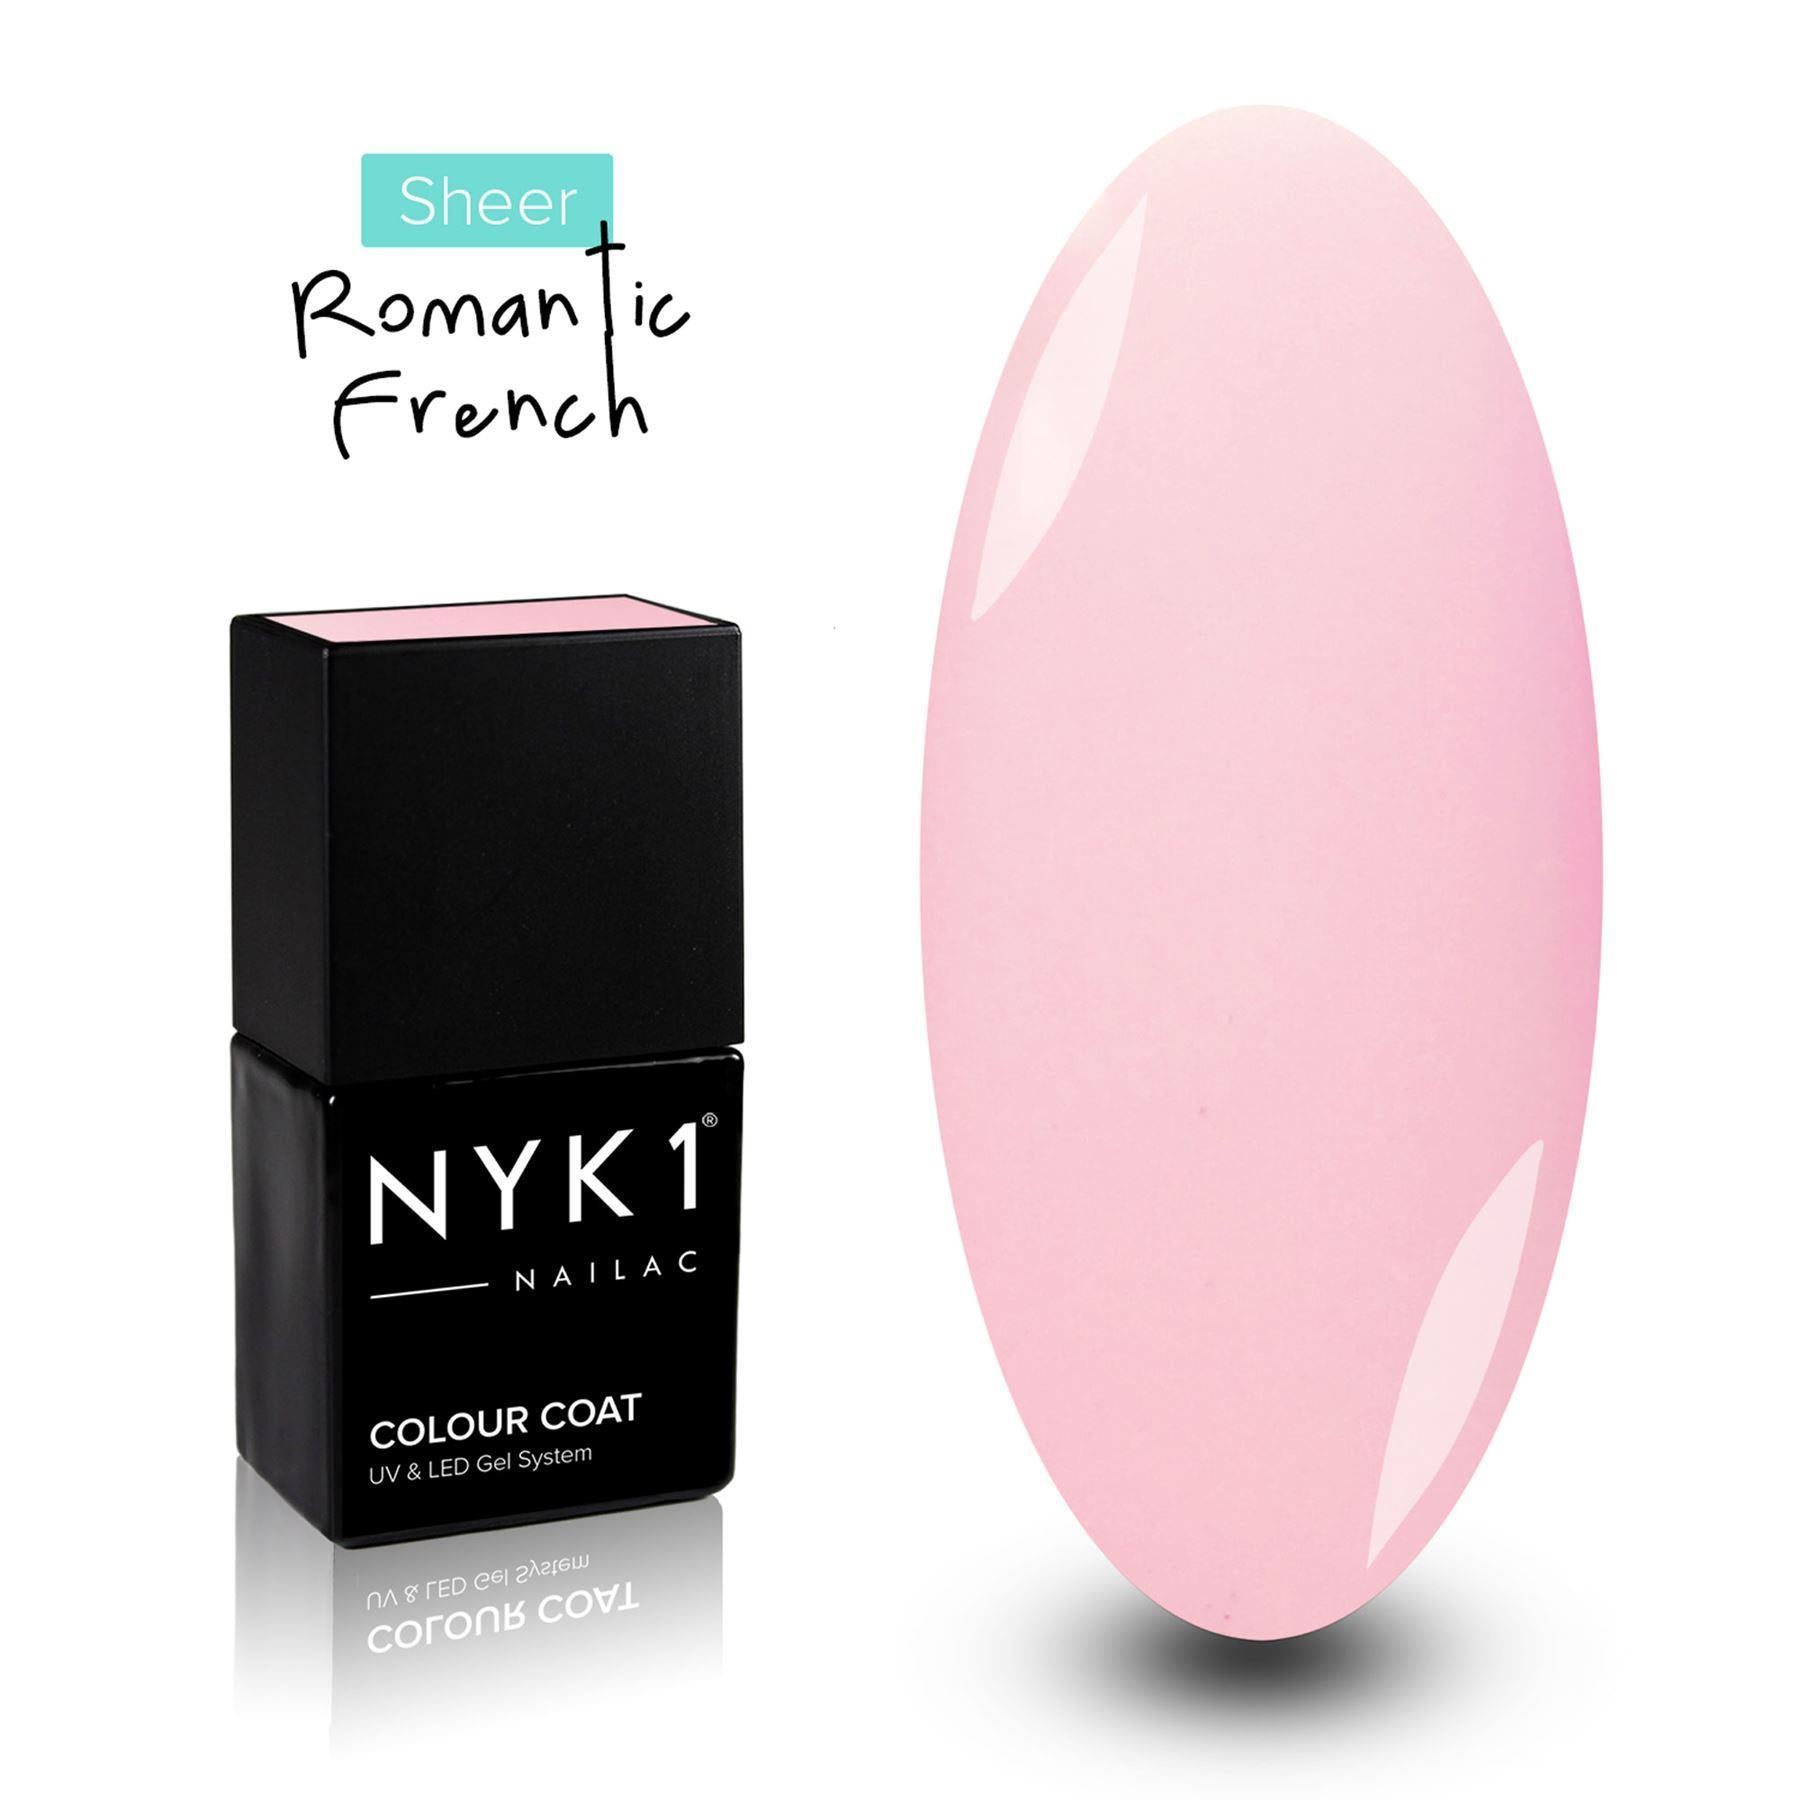 Nailac Pale Pink Gel Nail Polish Romantic French by NYK1